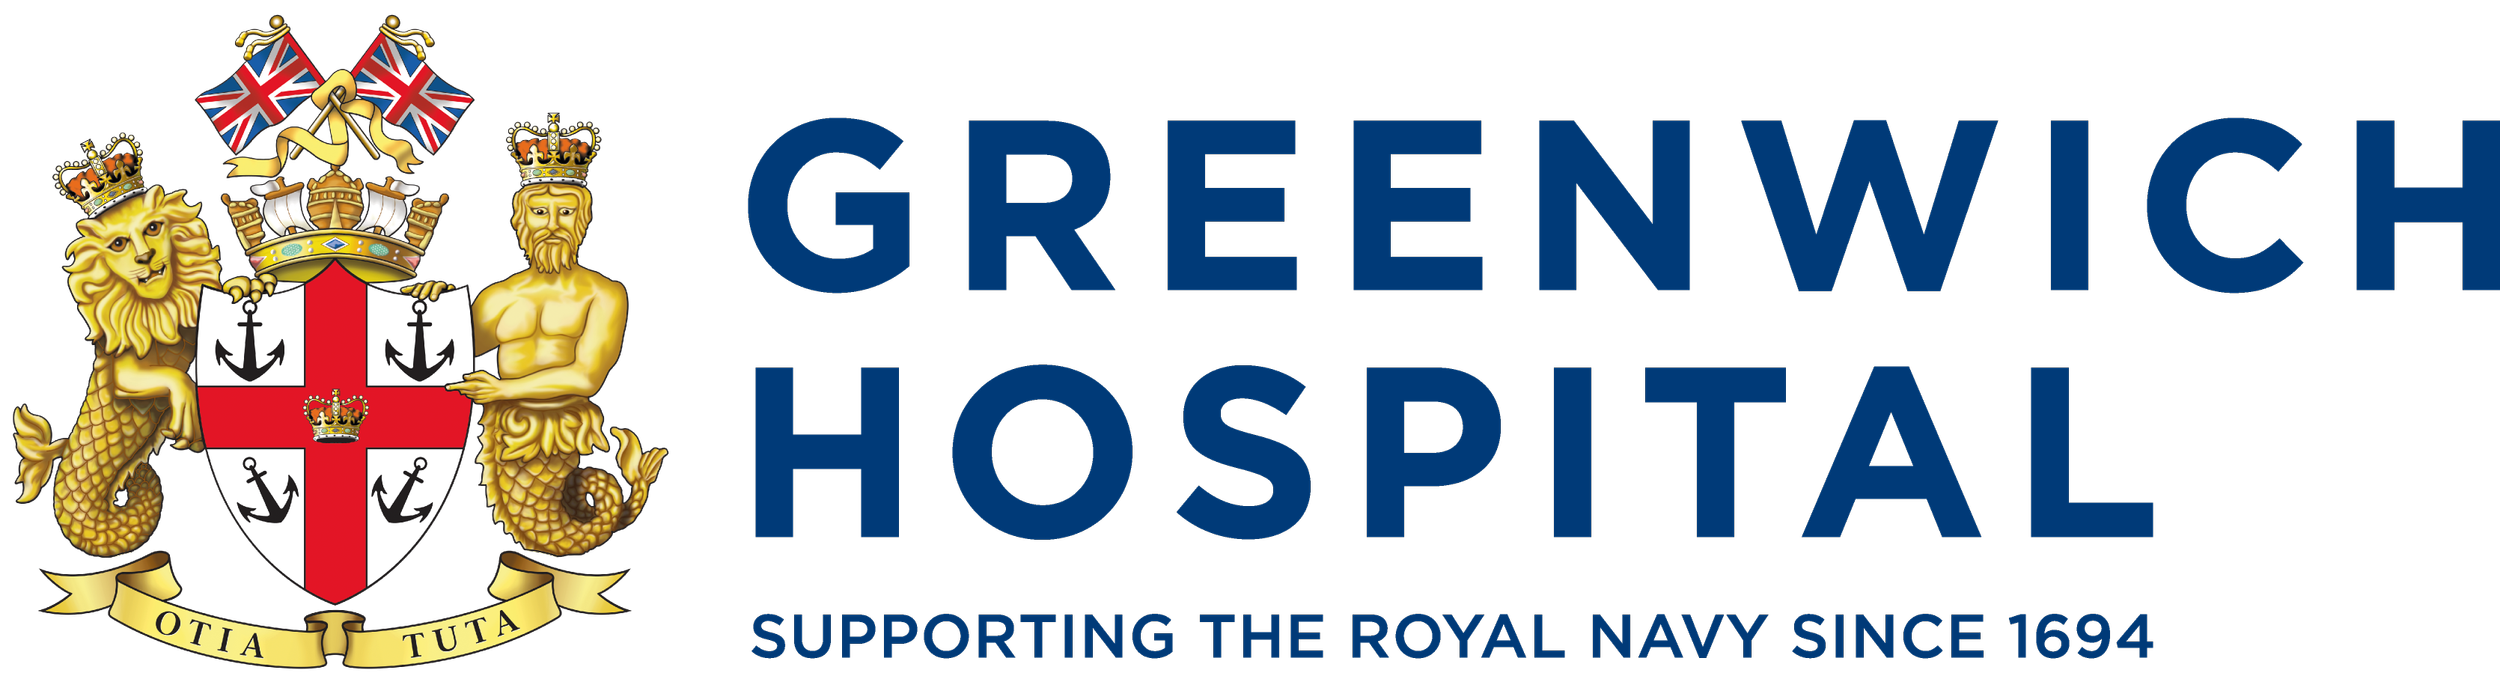 greenwich_hospital_logo.png